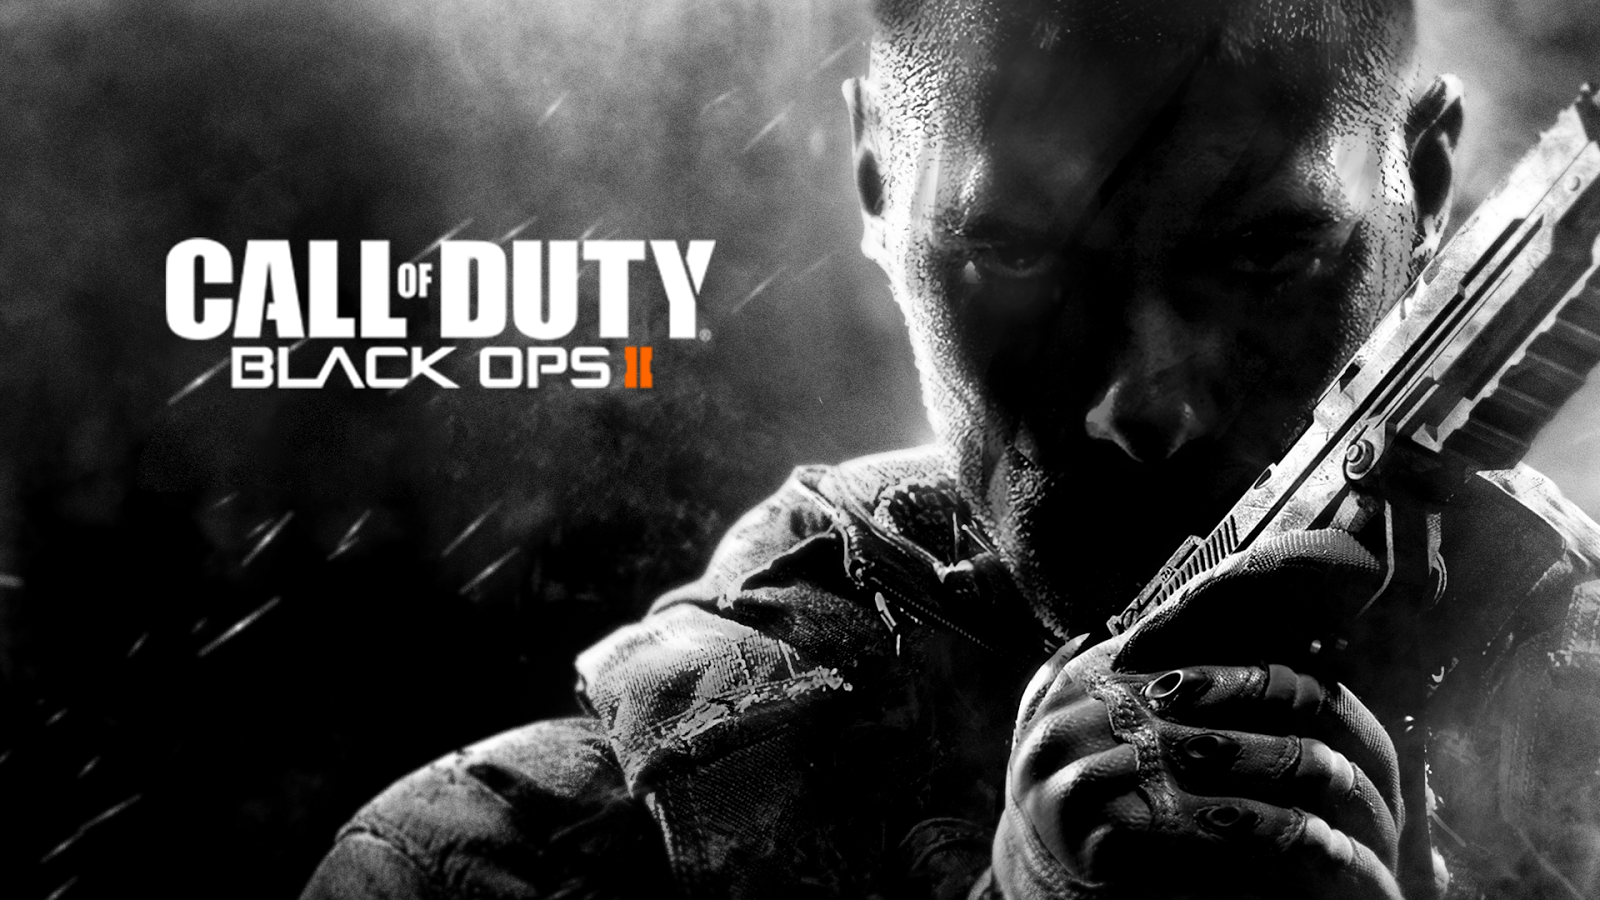 Call Of Duty Black Ops 2 Wallpaper, Fantastic Call Of Duty Black